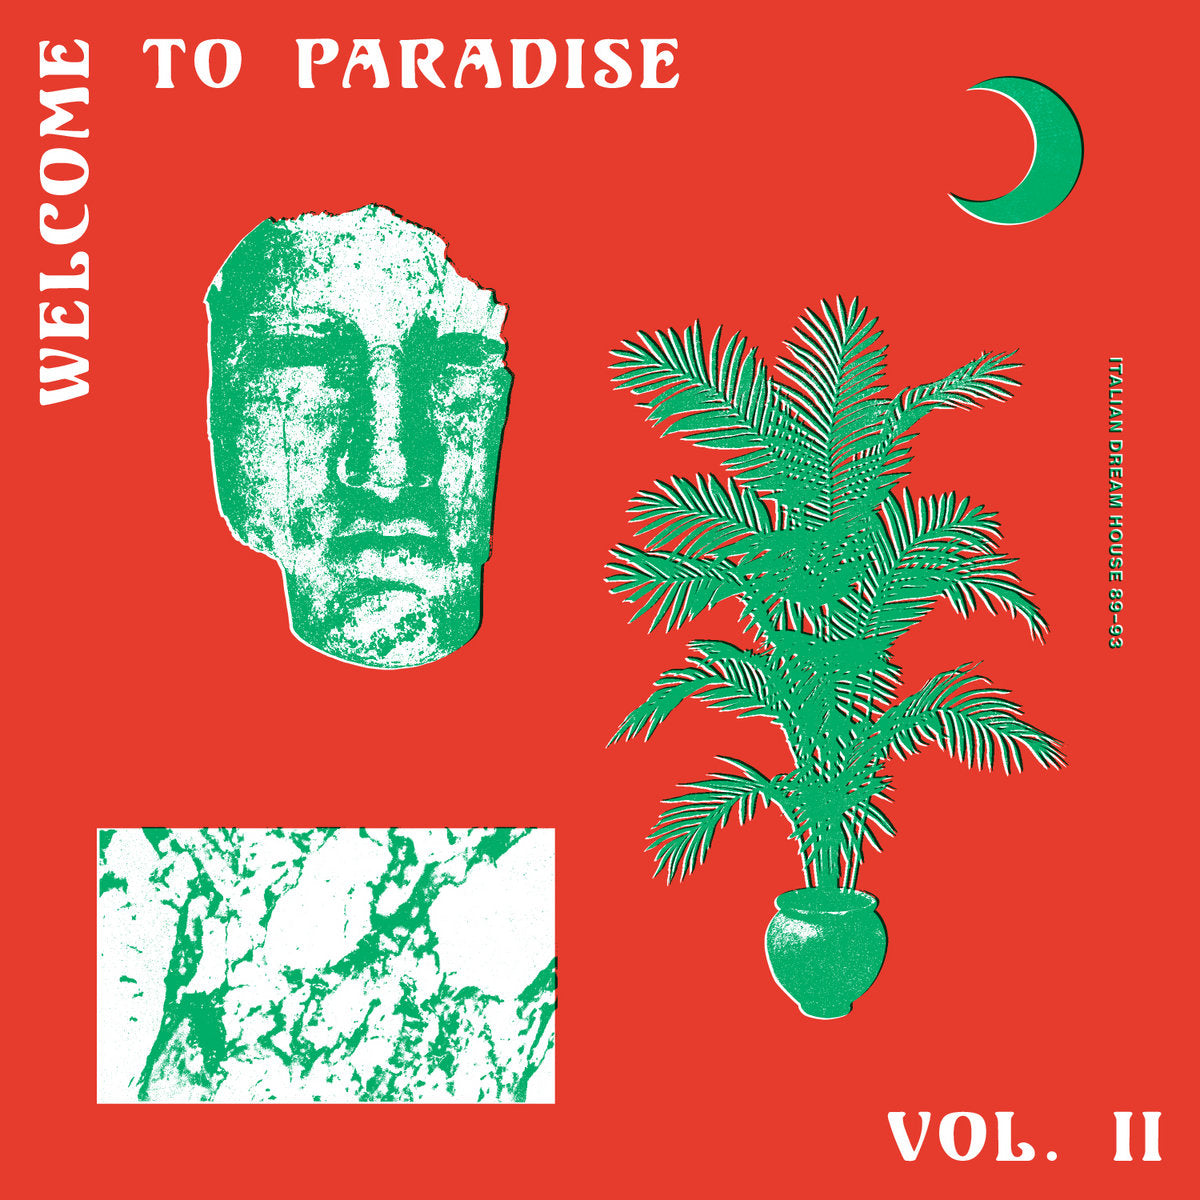 VARIOUS ARTISTS - WELCOME TO PARADISE VOL. 2: ITALIAN DREAM HOUSE 89-93 Vinyl 2xLP